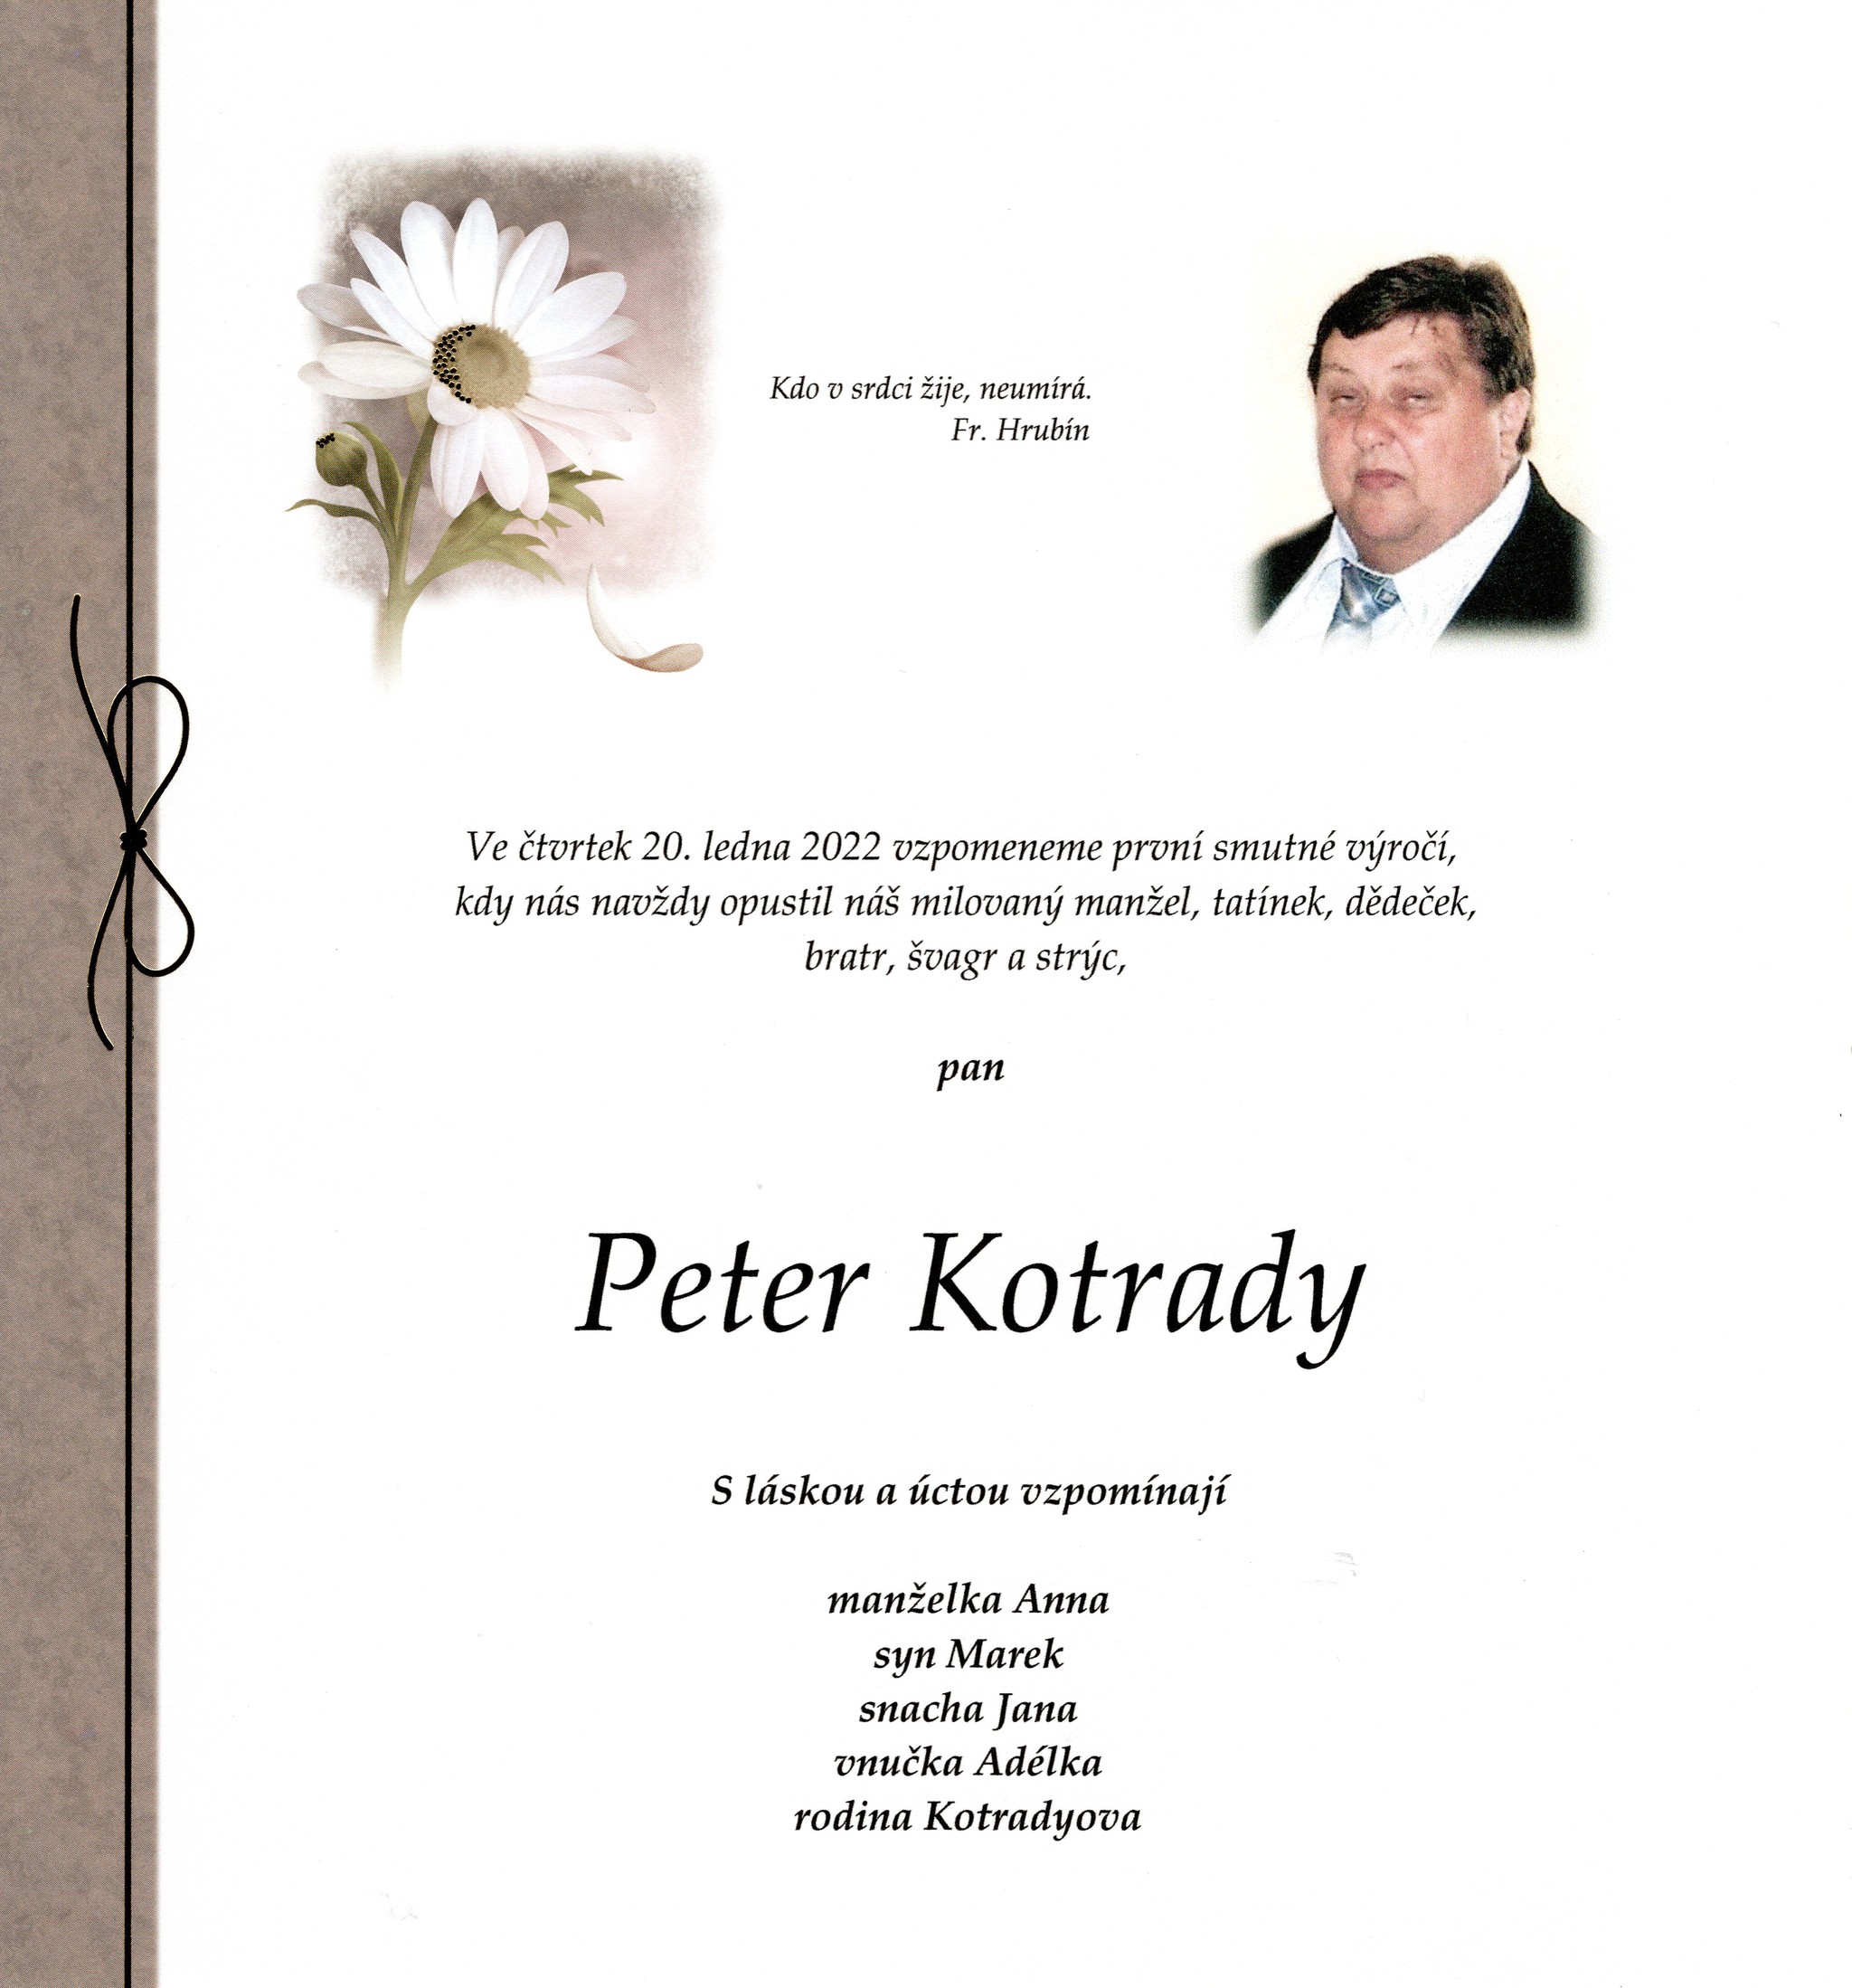 Peter Kotrady